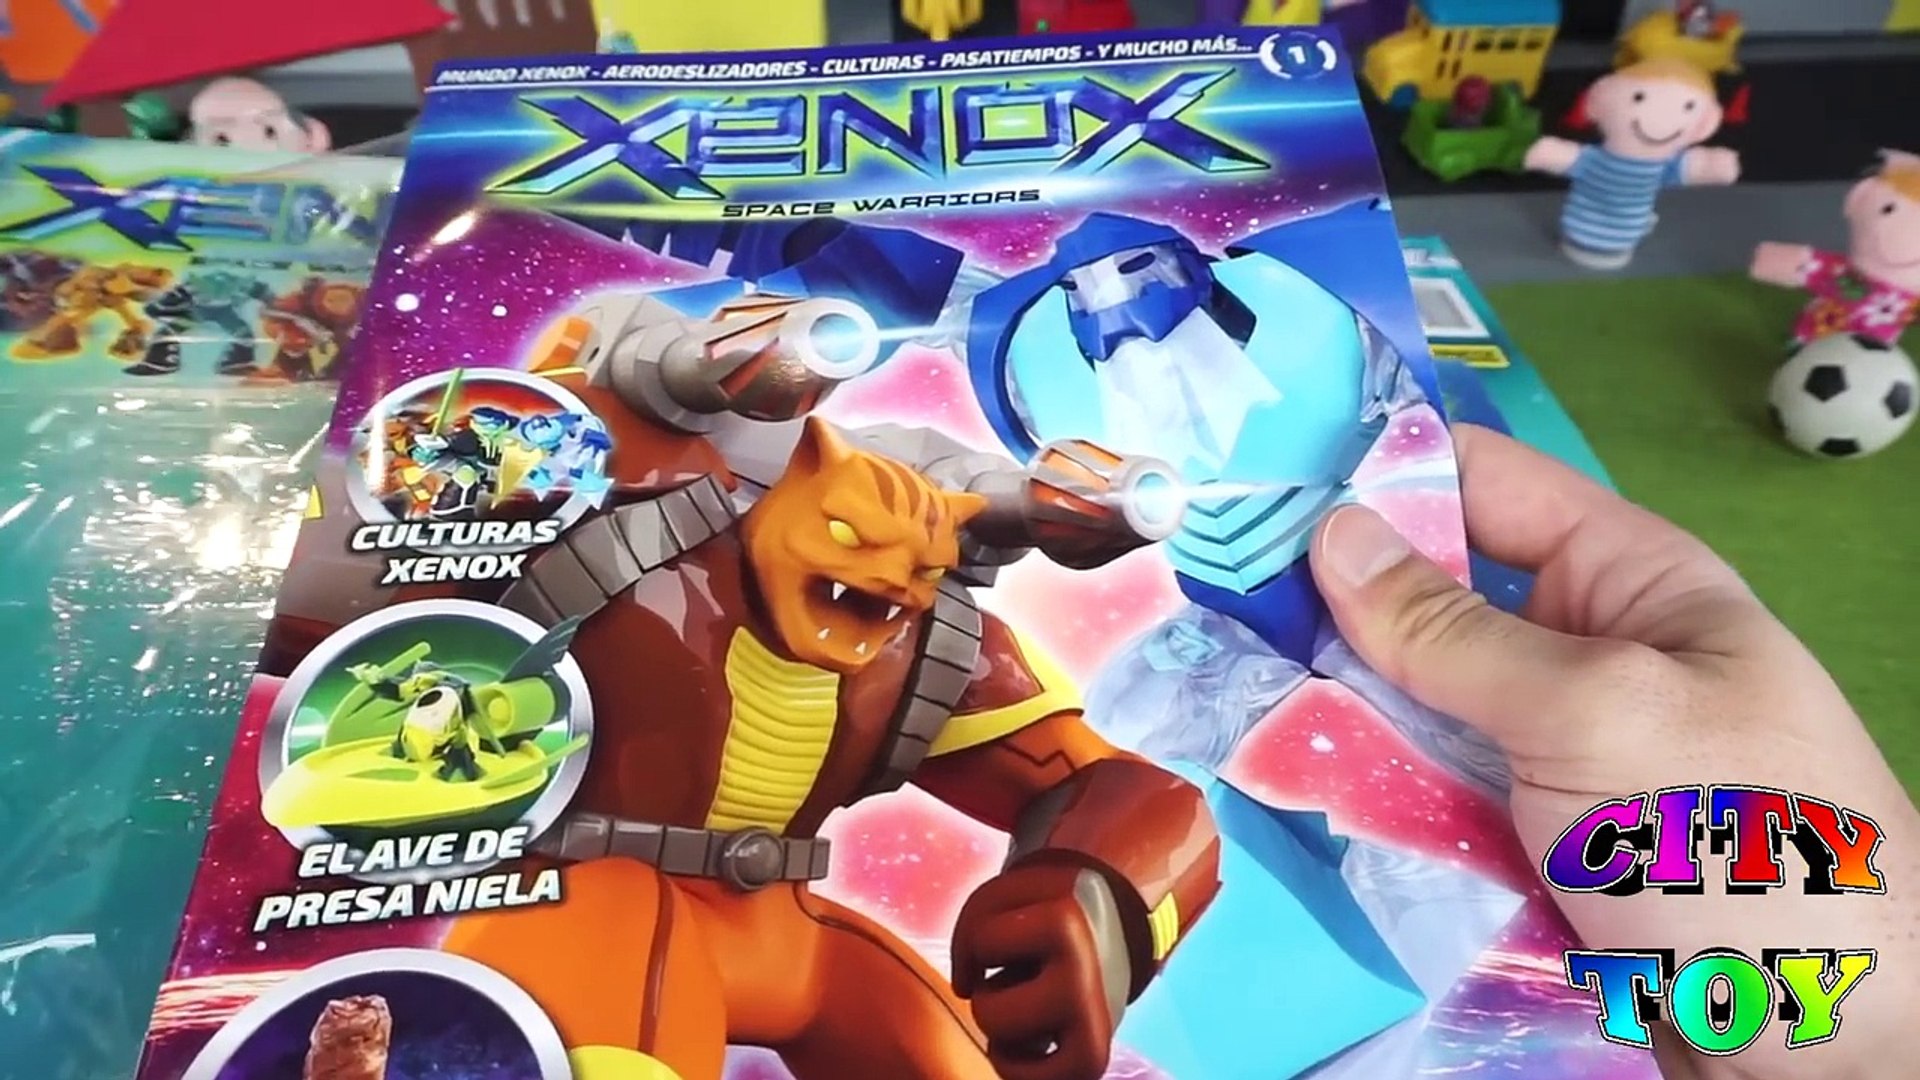 Xenox Space Warriors Revista + Guía + sobres sorpresas Cap.1 - video  Dailymotion